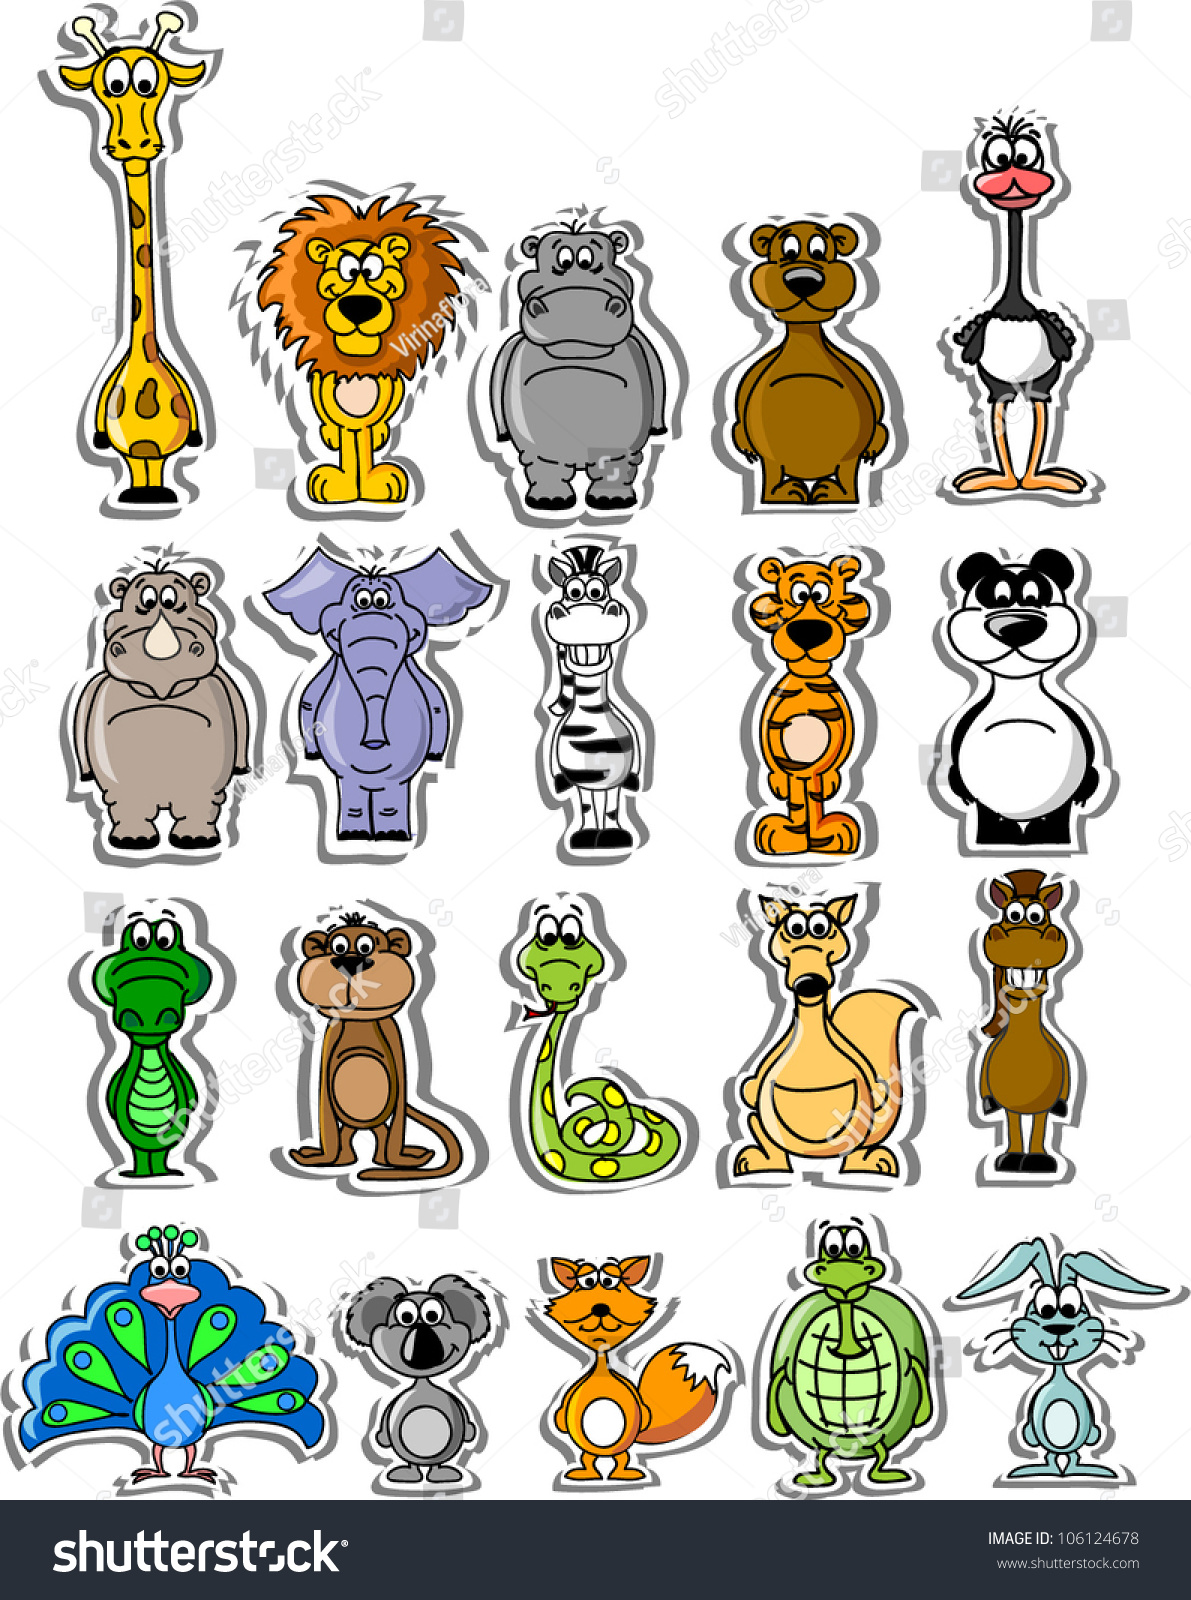 Set Of Cartoon Vector Animals - 106124678 : Shutterstock